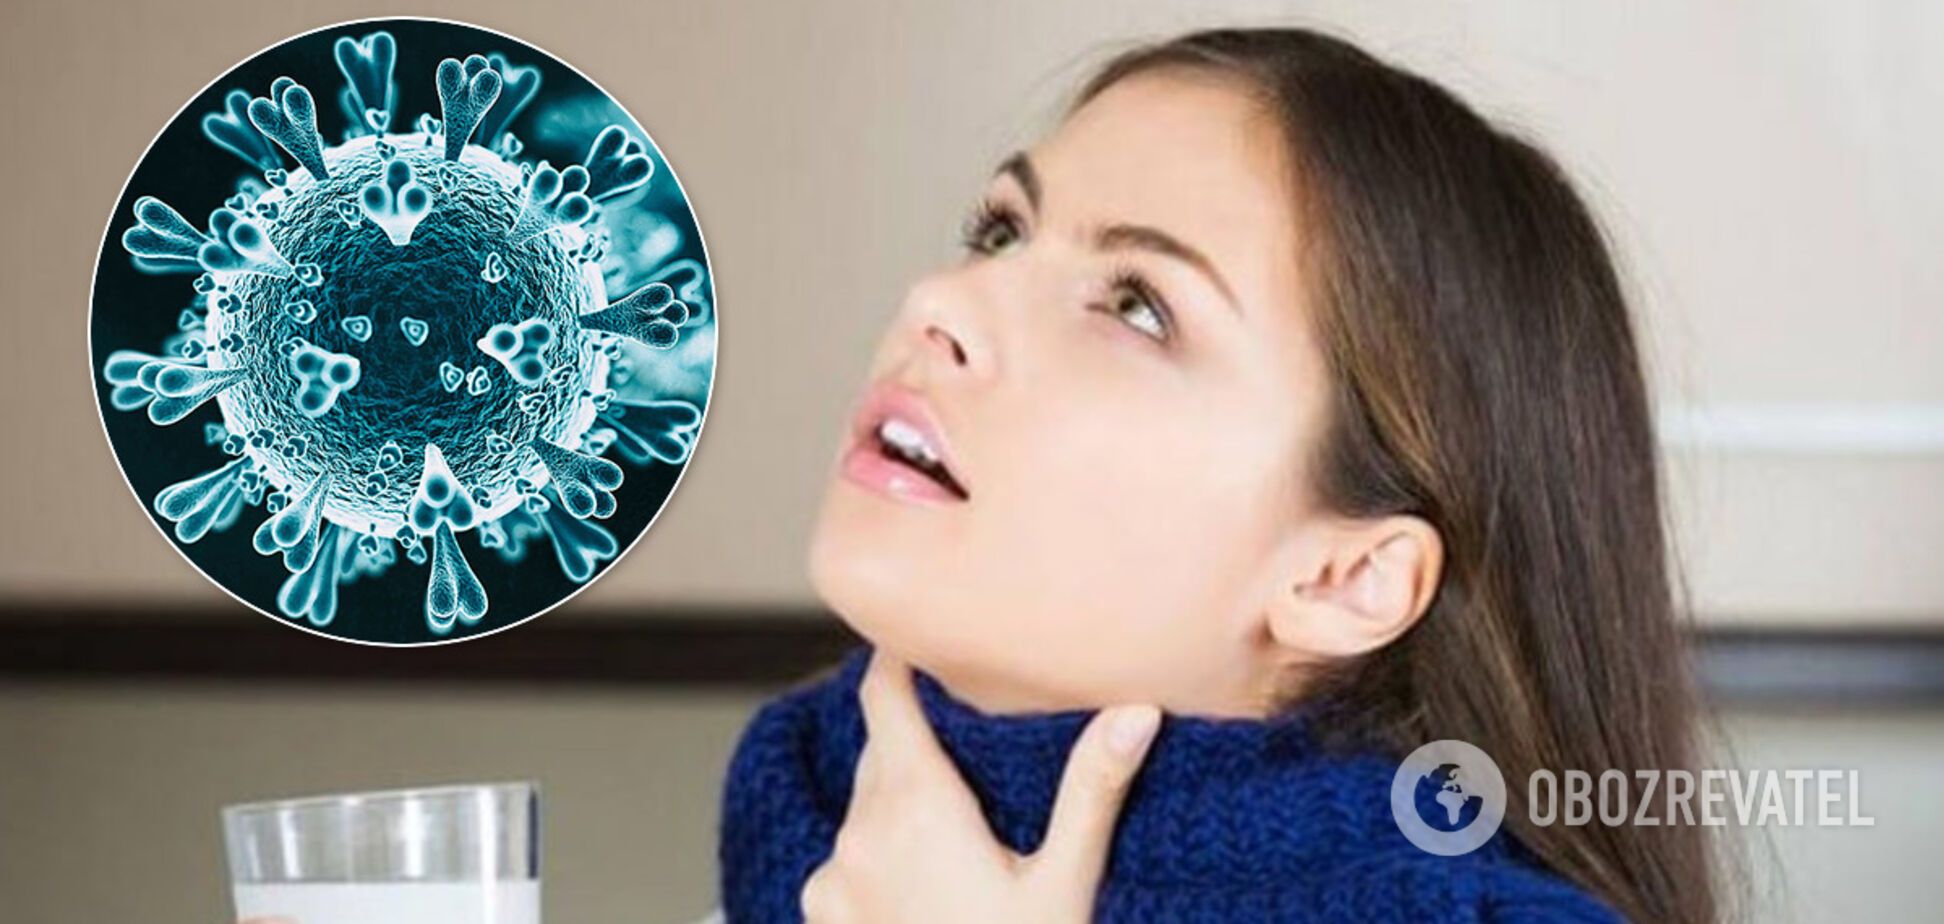 Обнаружено дешевое средство от симптомов коронавируса